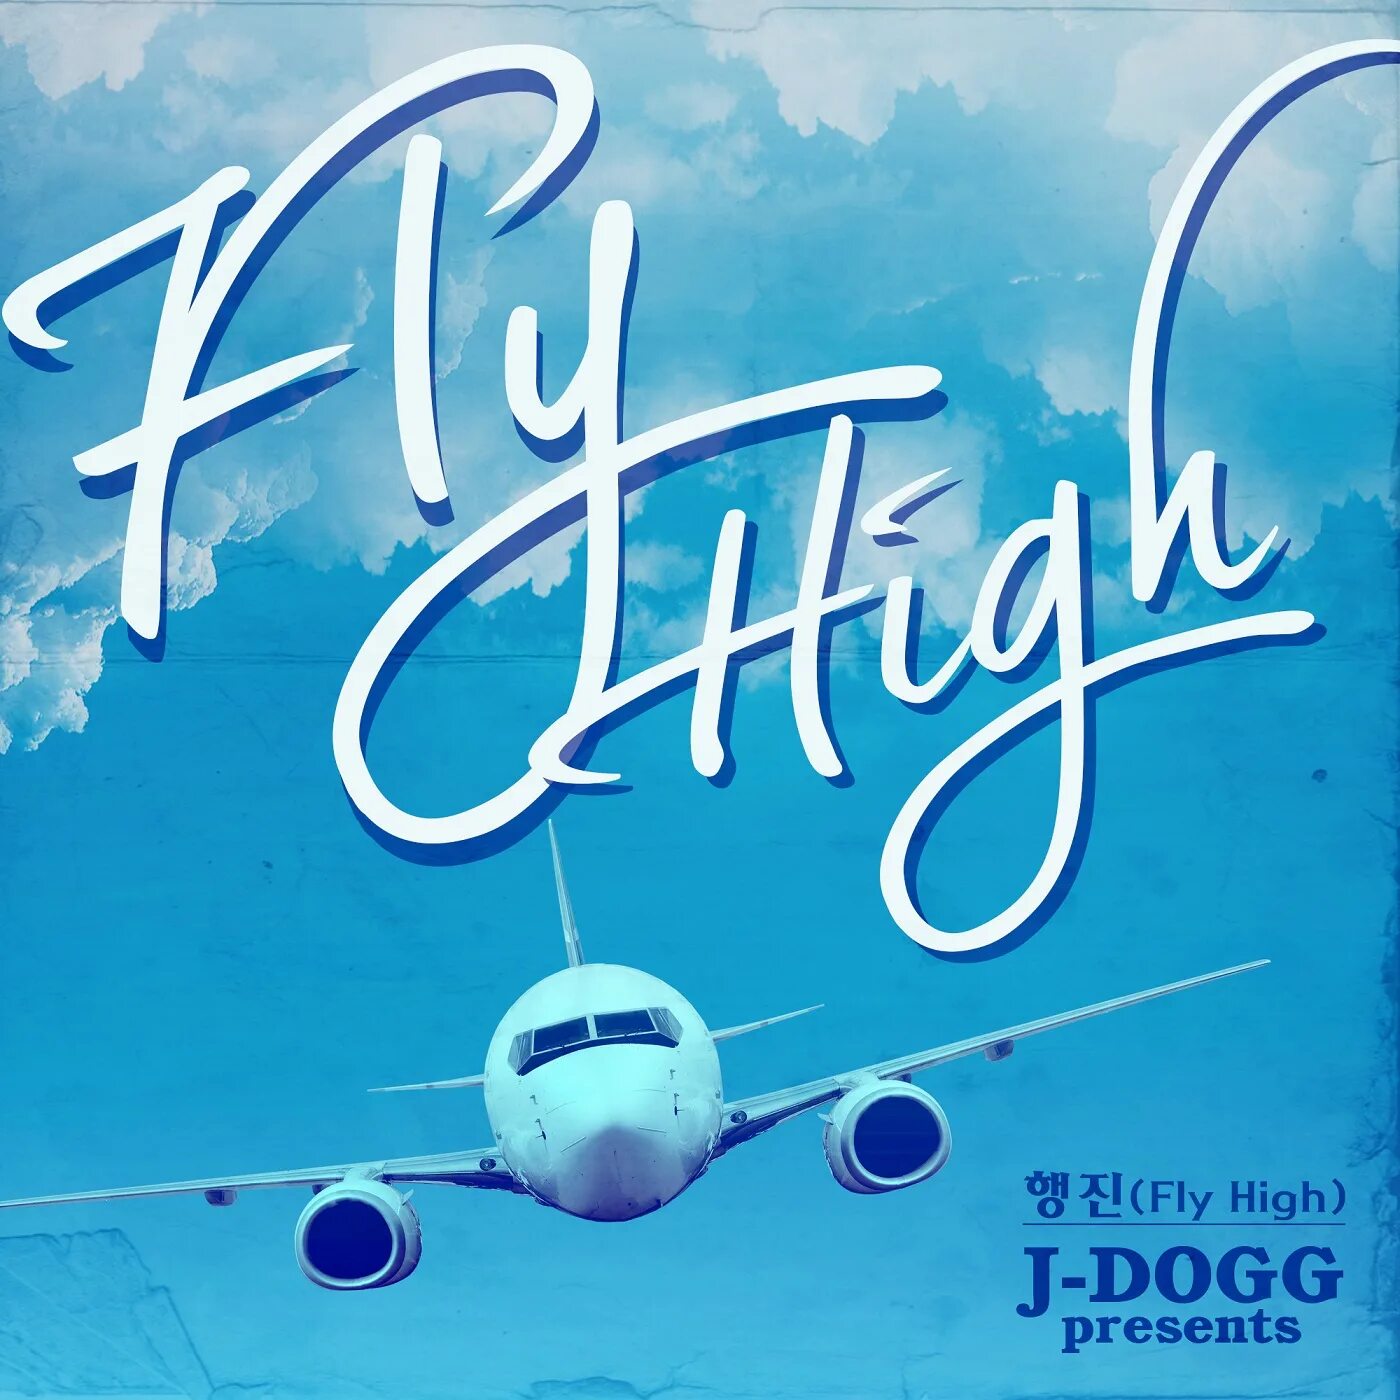 We fly high. Fly High. Fly High activity book. Fly High 1. Fly High 2.